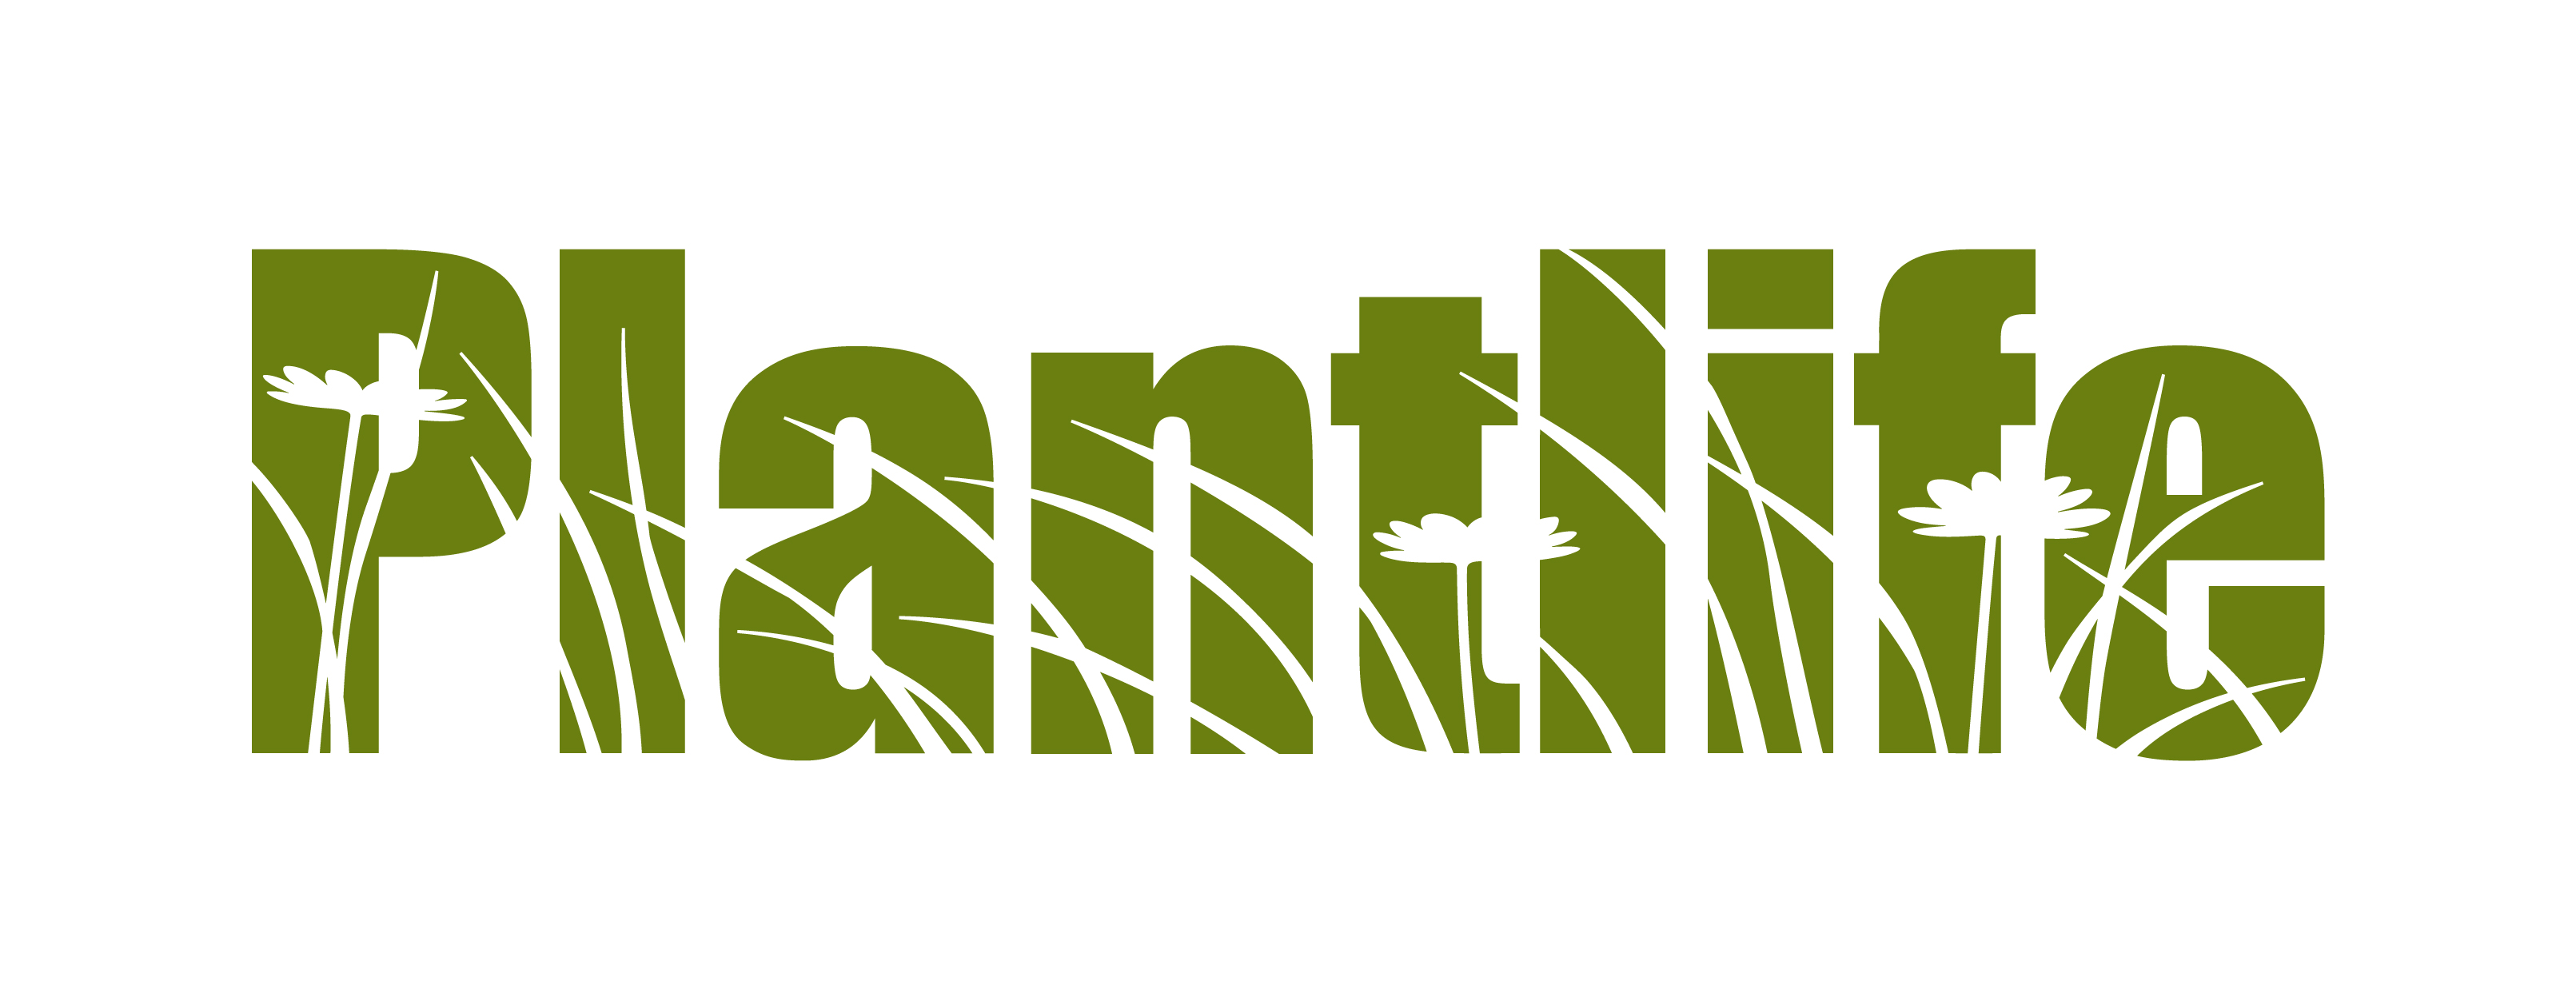 Planted area. Plant логотип. Лого растения. Логотипы с растениями Эстетика. Логотип из растений.